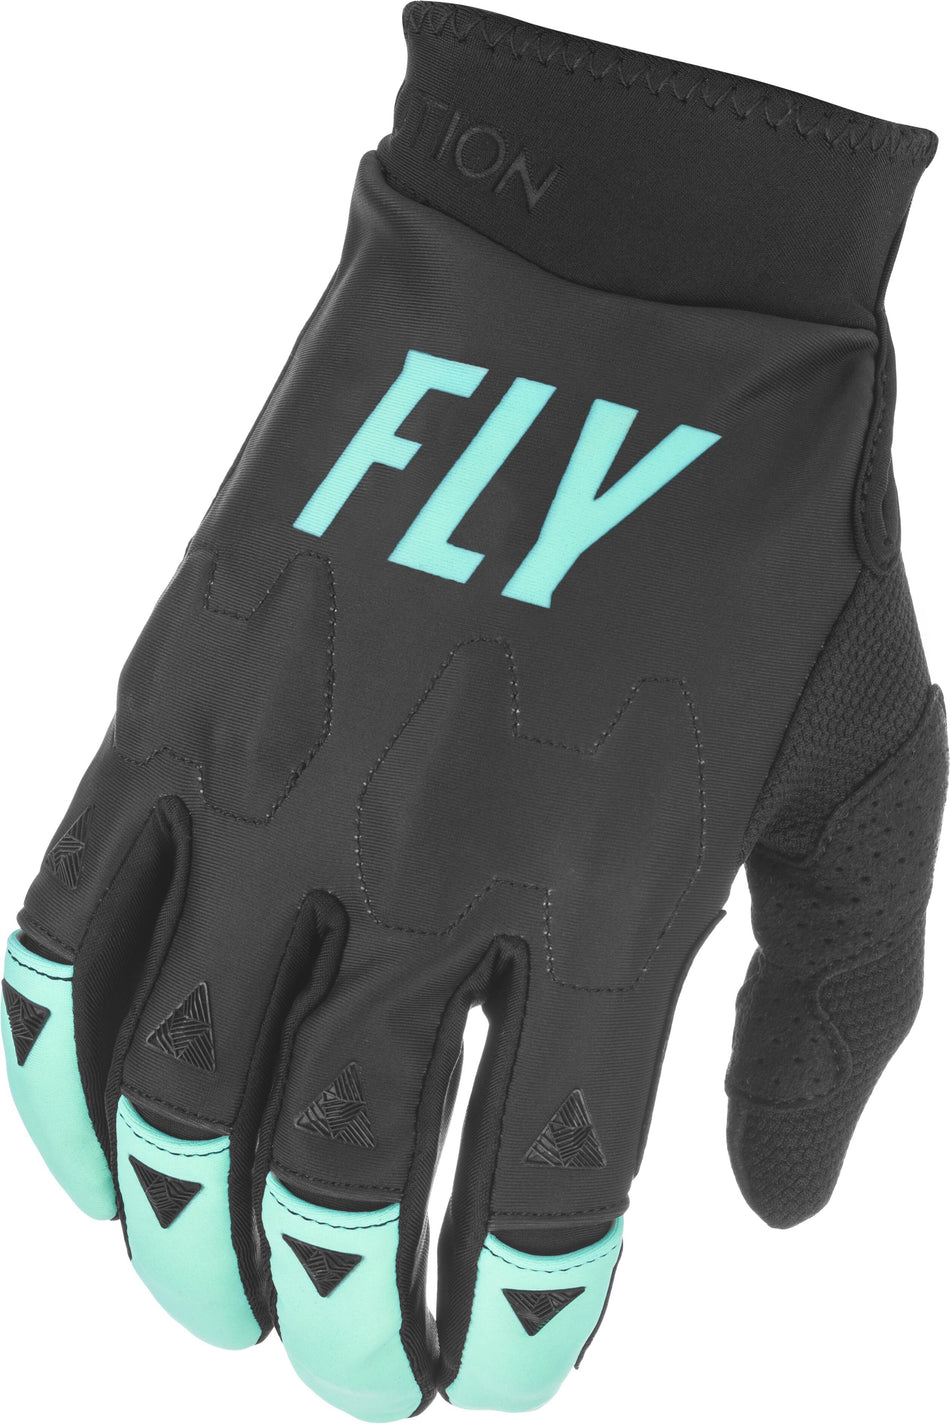 FLY RACING Evolution Dst L.E. Gloves Mint/Black Sz 11 374-11911